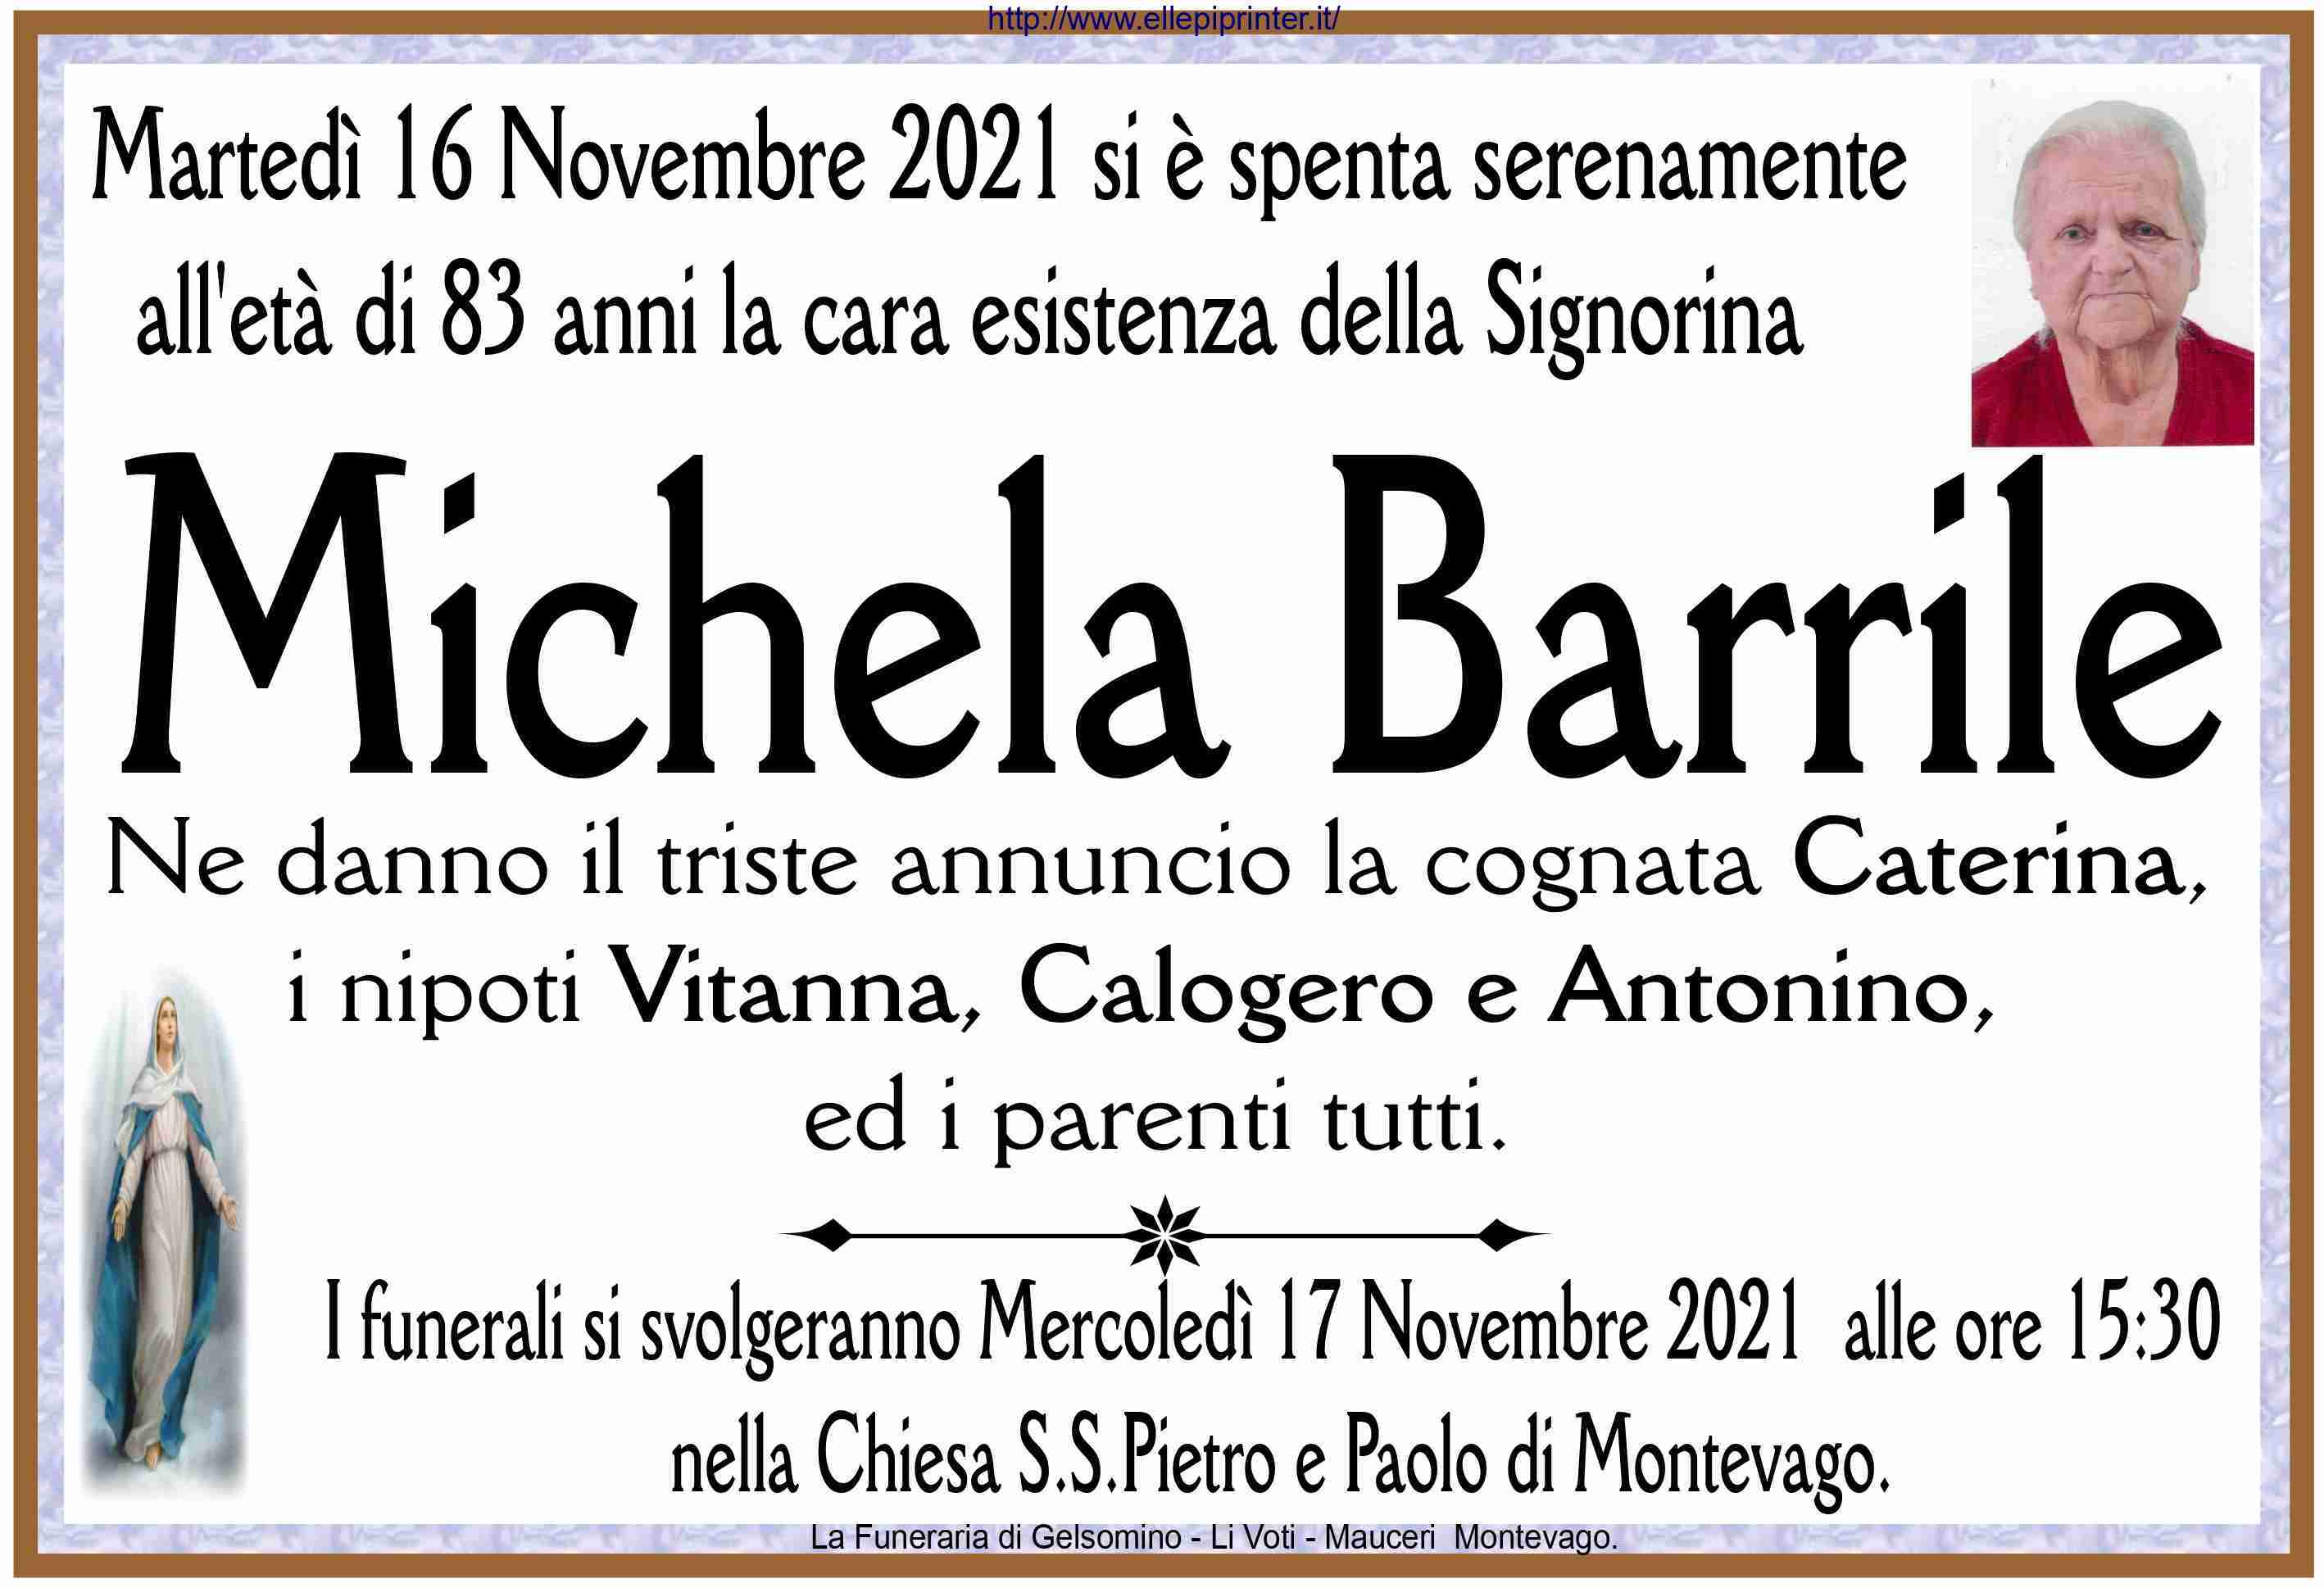 Michela Barrile